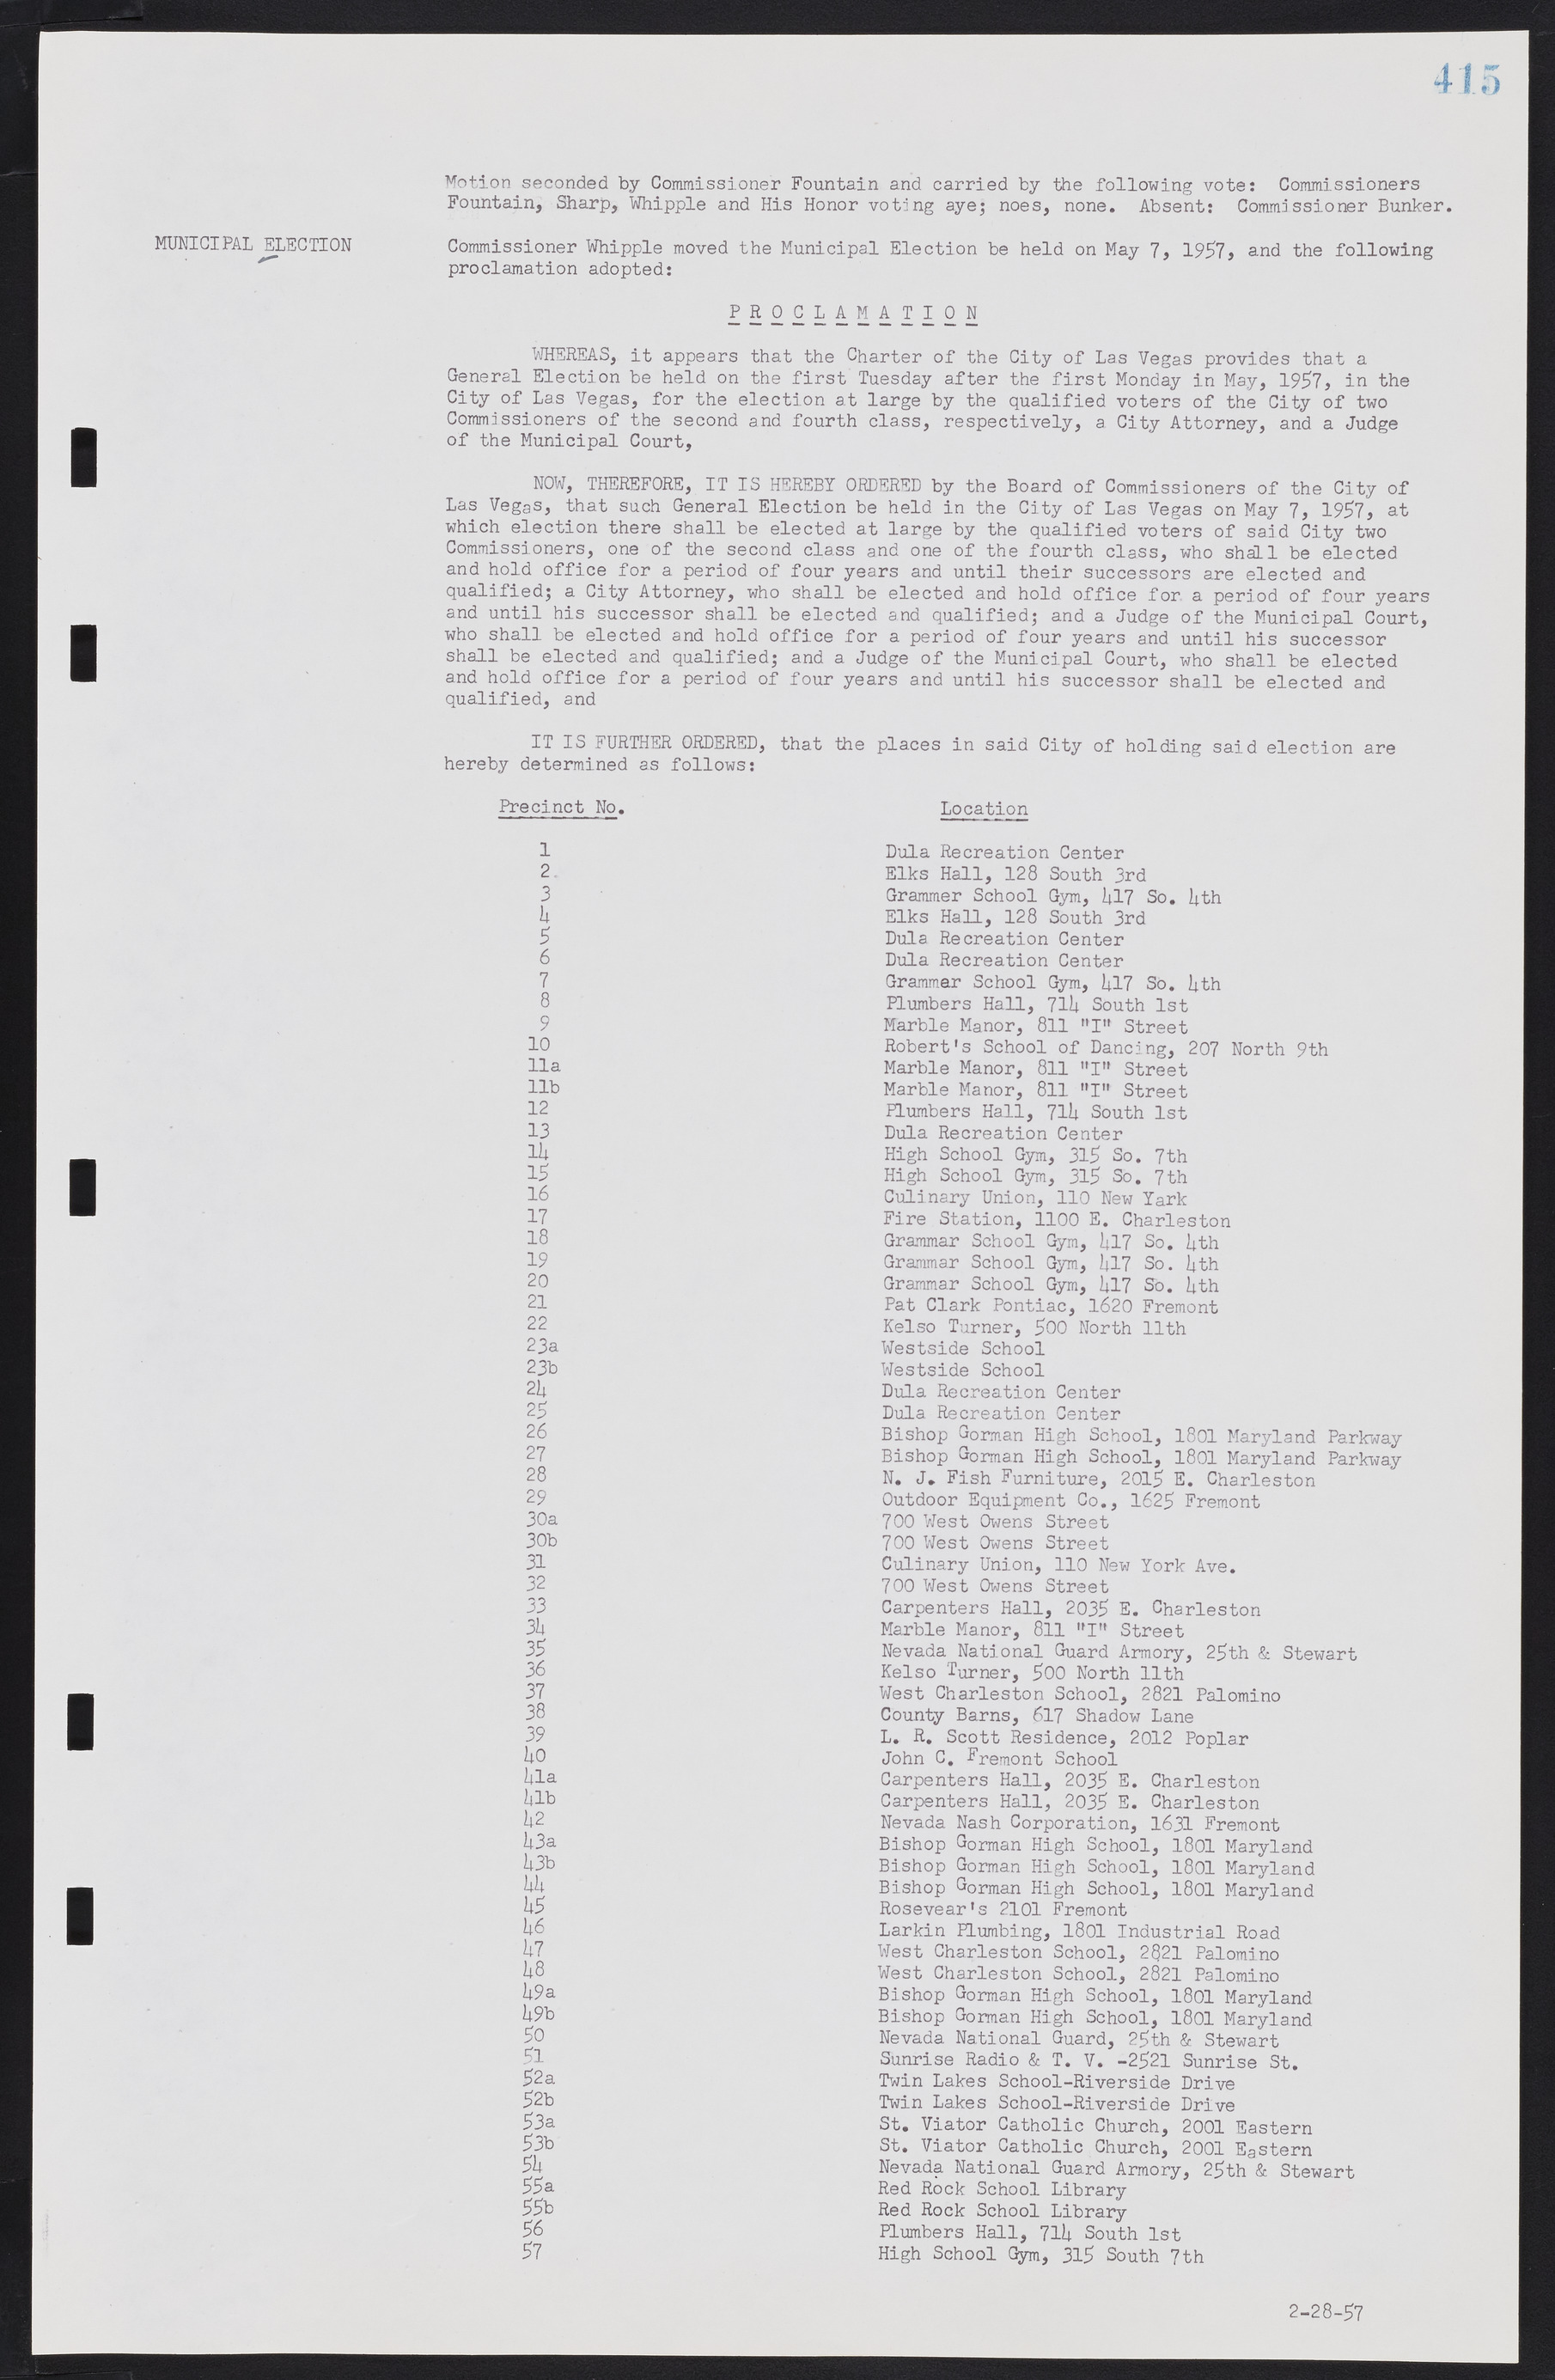 Las Vegas City Commission Minutes, September 21, 1955 to November 20, 1957, lvc000010-435